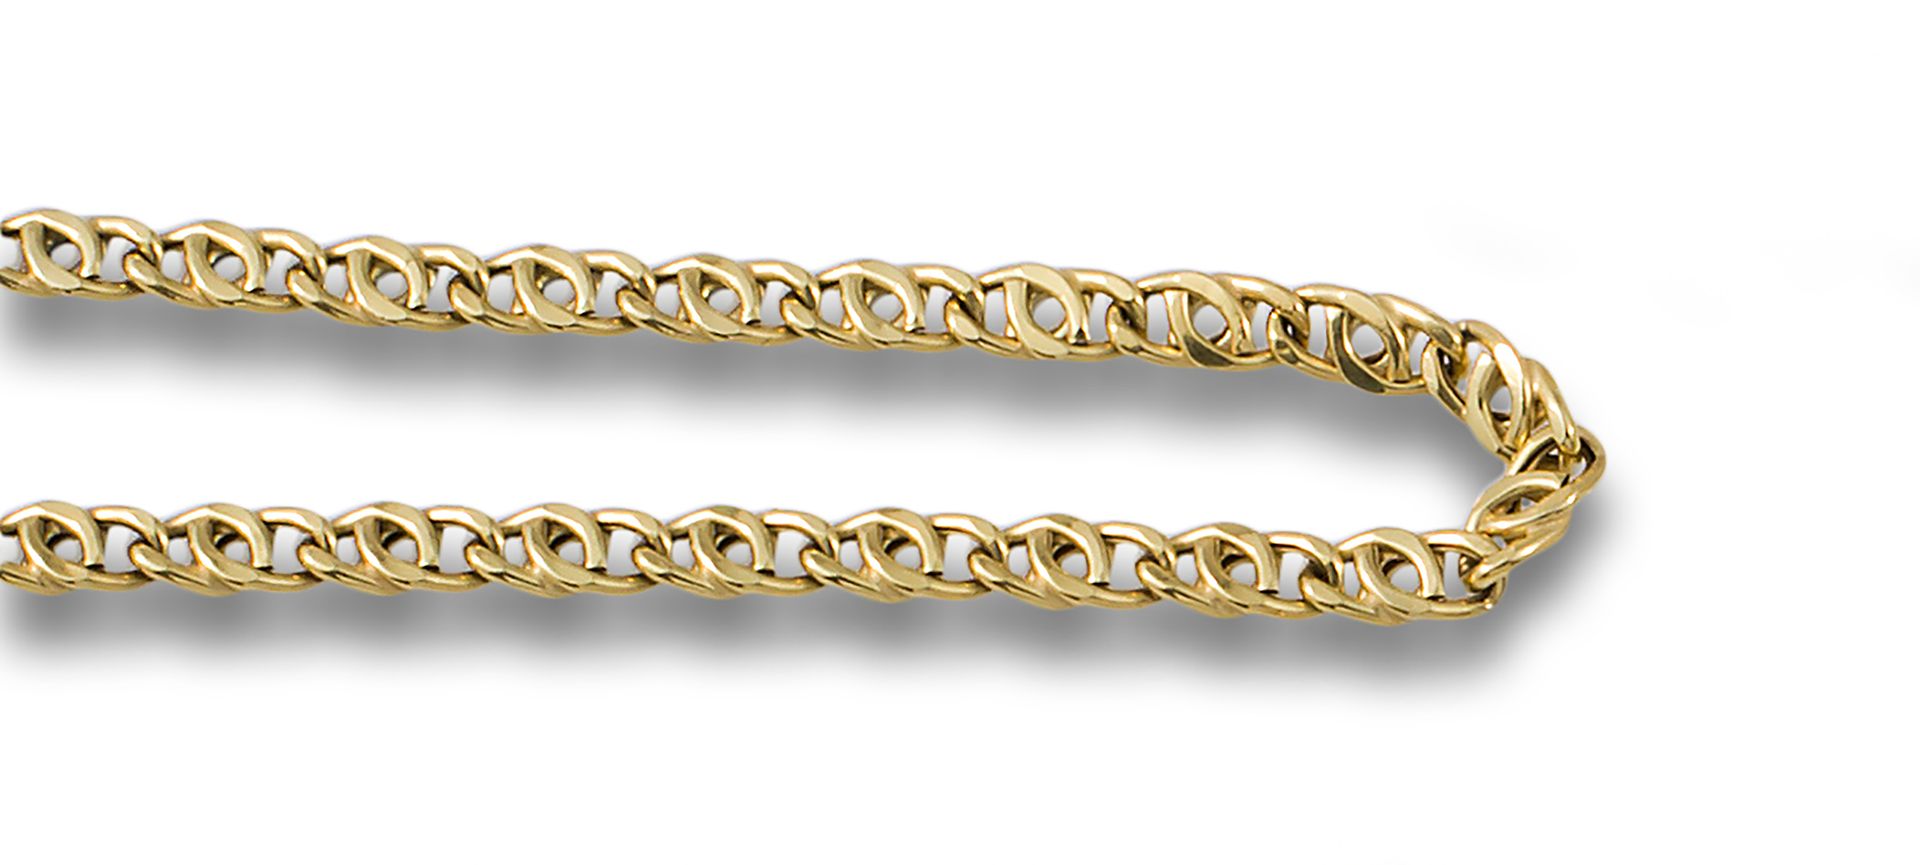 GOLD BRACELET OPENWORK LINKS 18kt yellow gold bracelet with intertwined openwork&hellip;